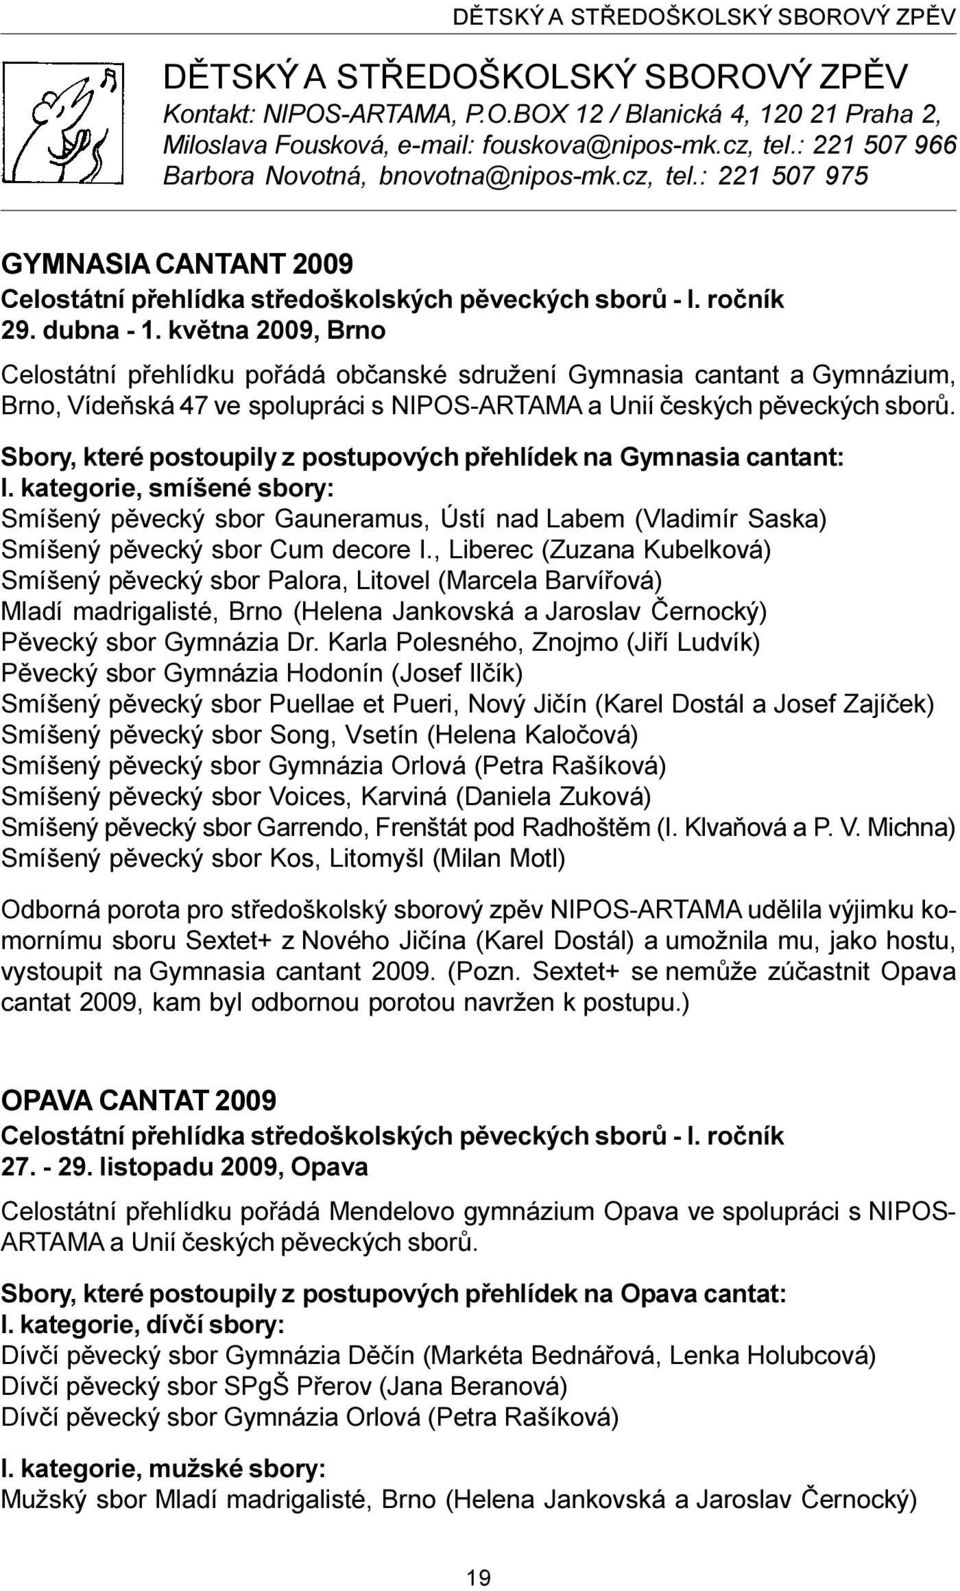 kvìtna 2009, Brno Celostátní pøehlídku poøádá obèanské sdružení Gymnasia cantant a Gymnázium, Brno, Vídeòská 47 ve spolupráci s NIPOS-ARTAMA a Unií èeských pìveckých sborù.